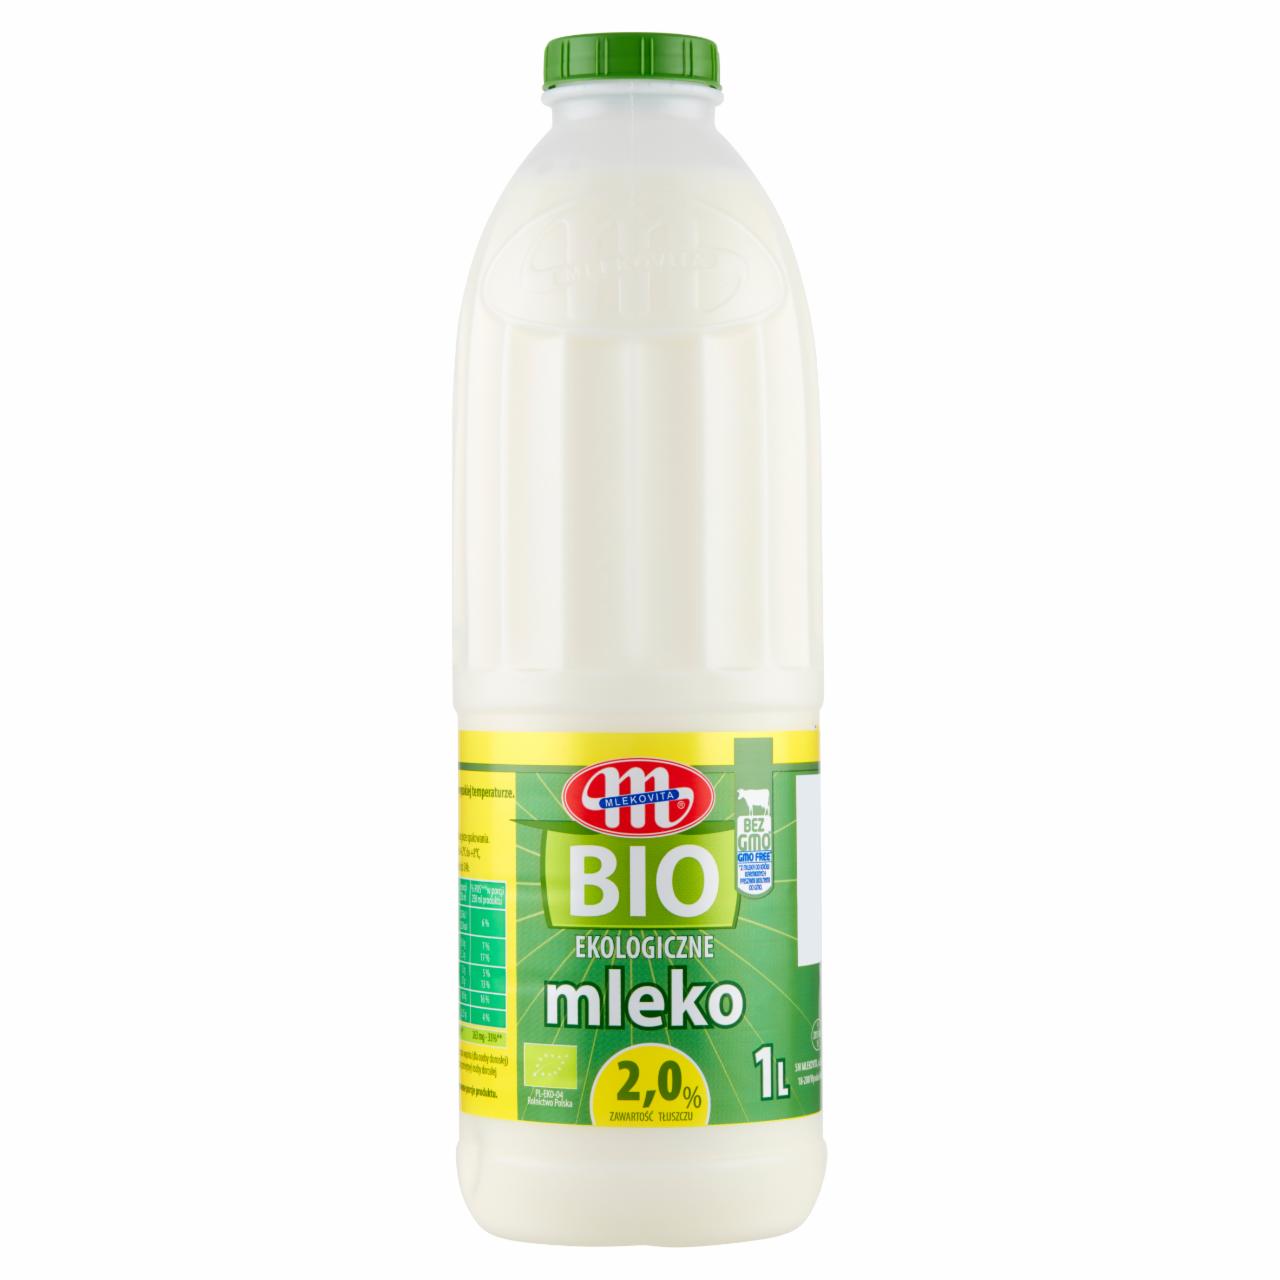 Zdjęcia - Mlekovita BIO Ekologiczne mleko 2,0% 1 l